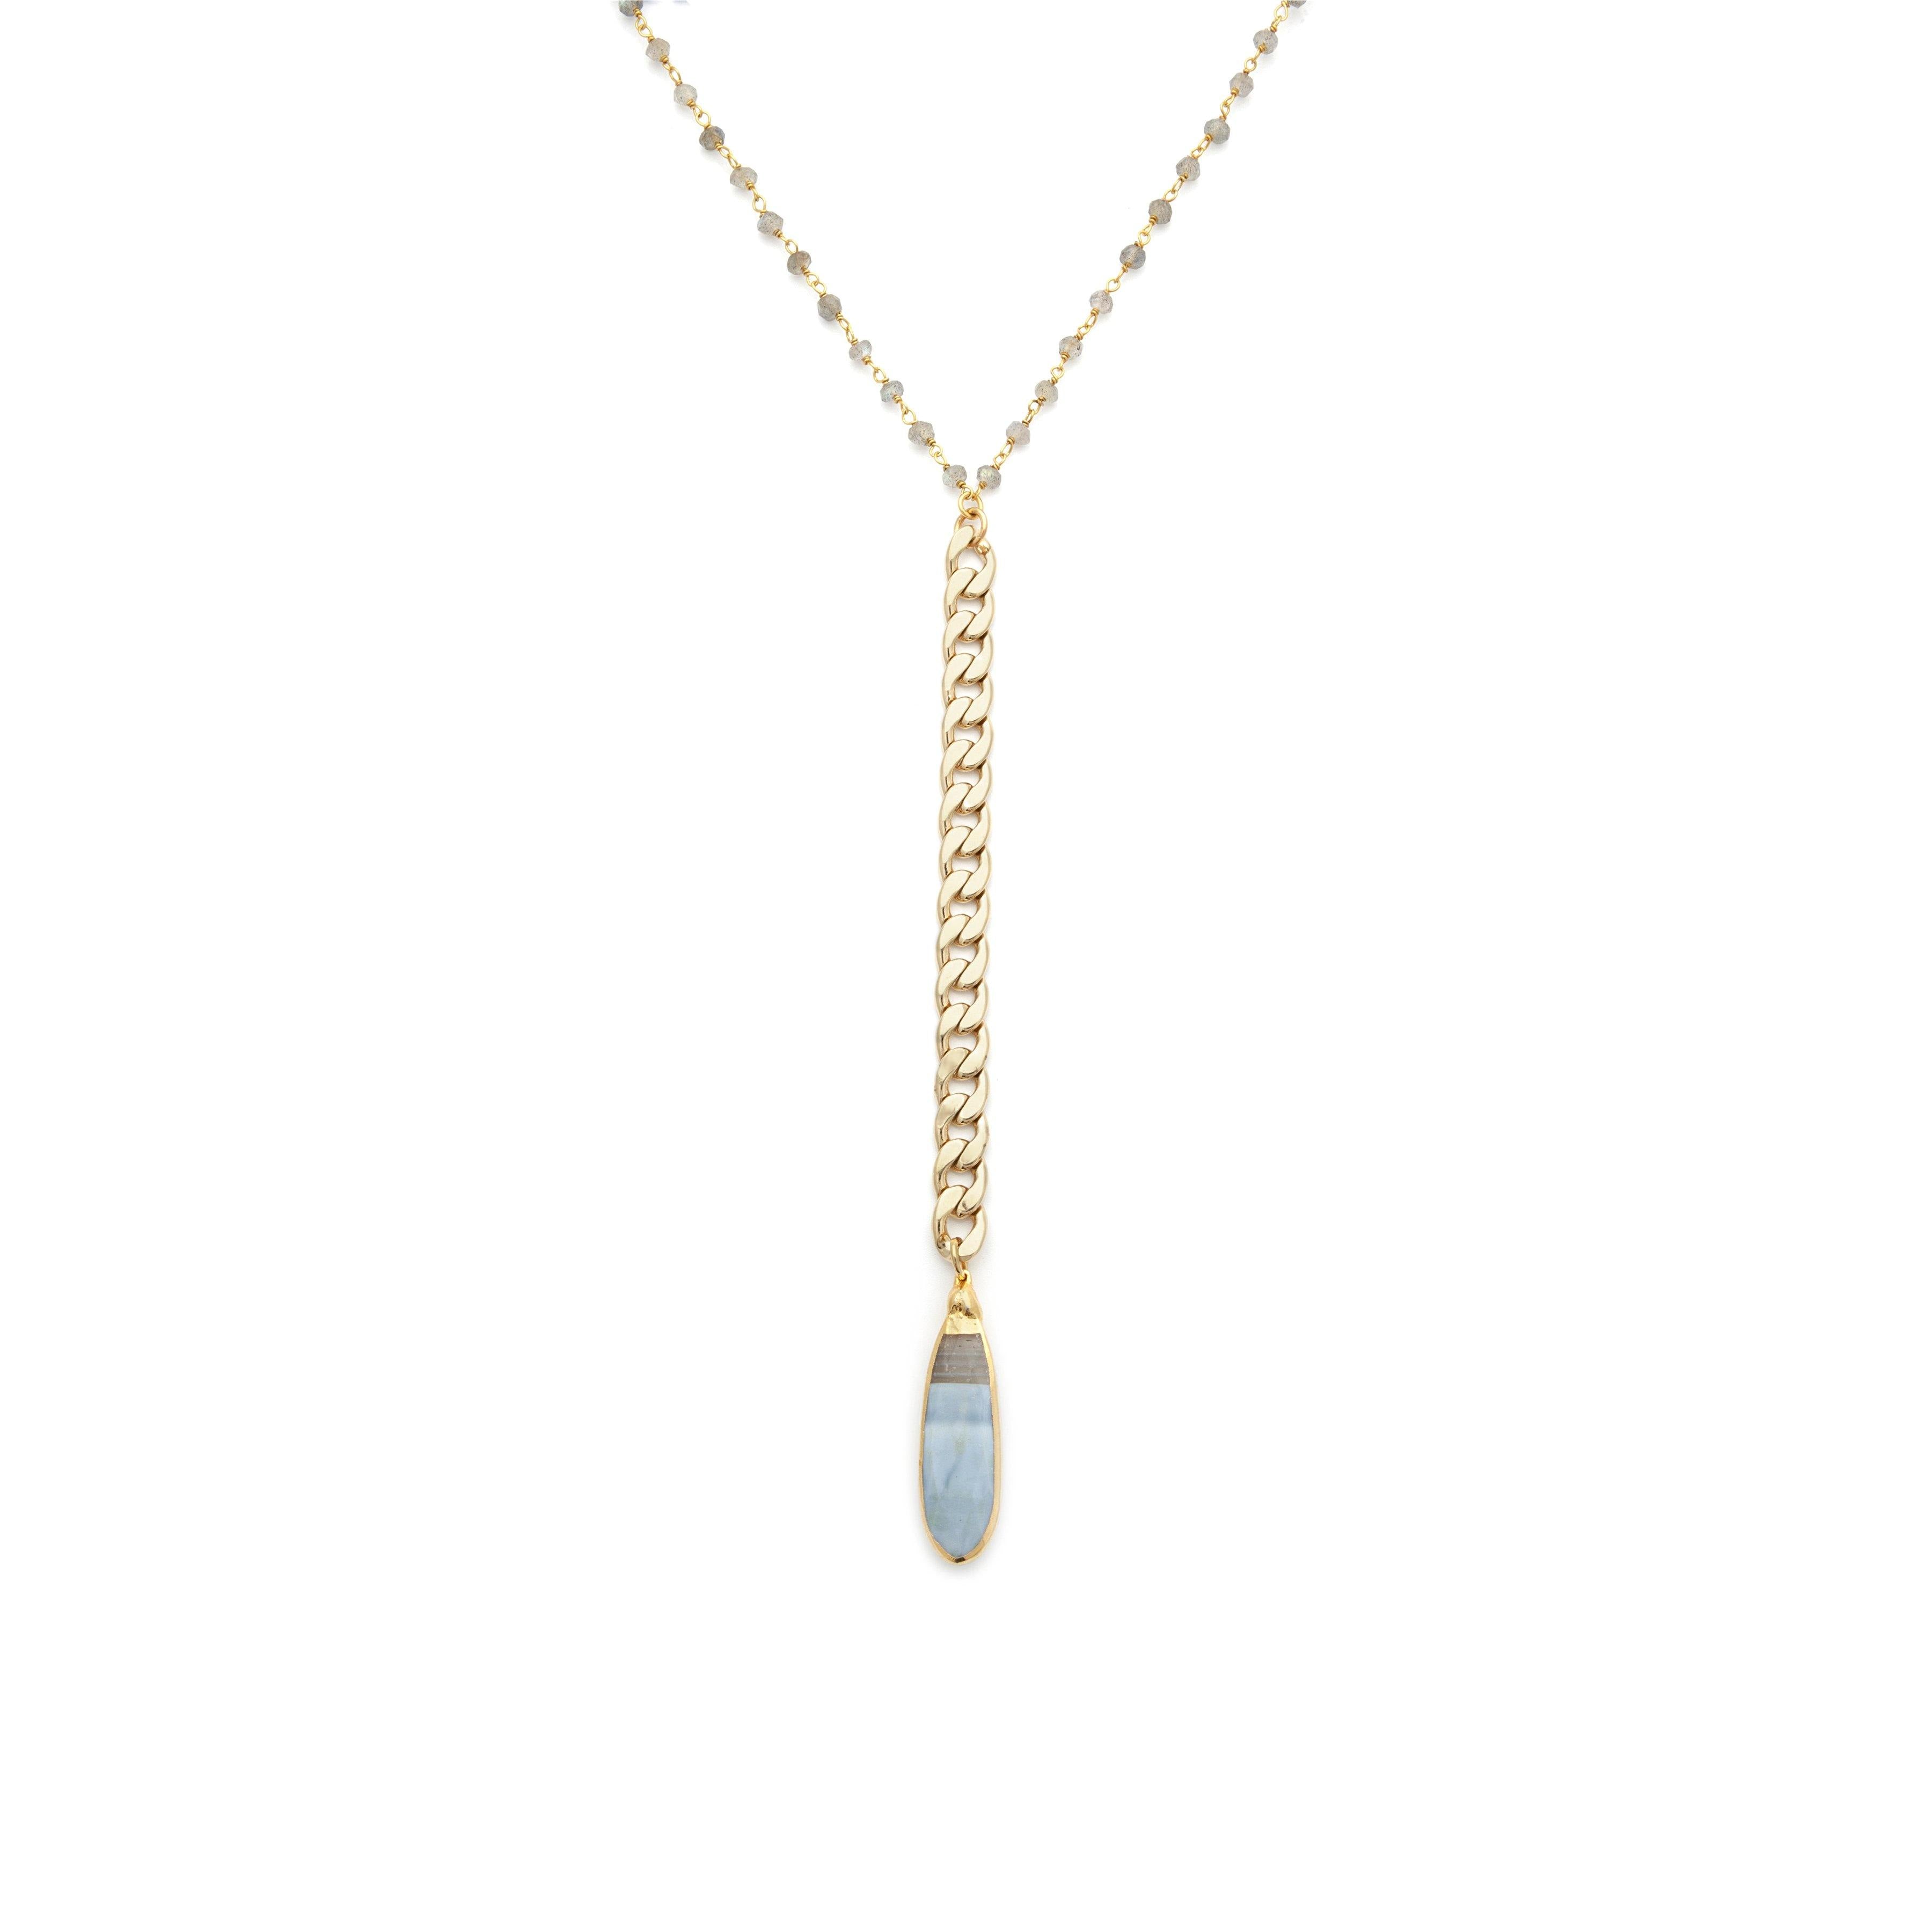 Bi-color Moonstone Necklace - Irit Sorokin Designs Jewelry